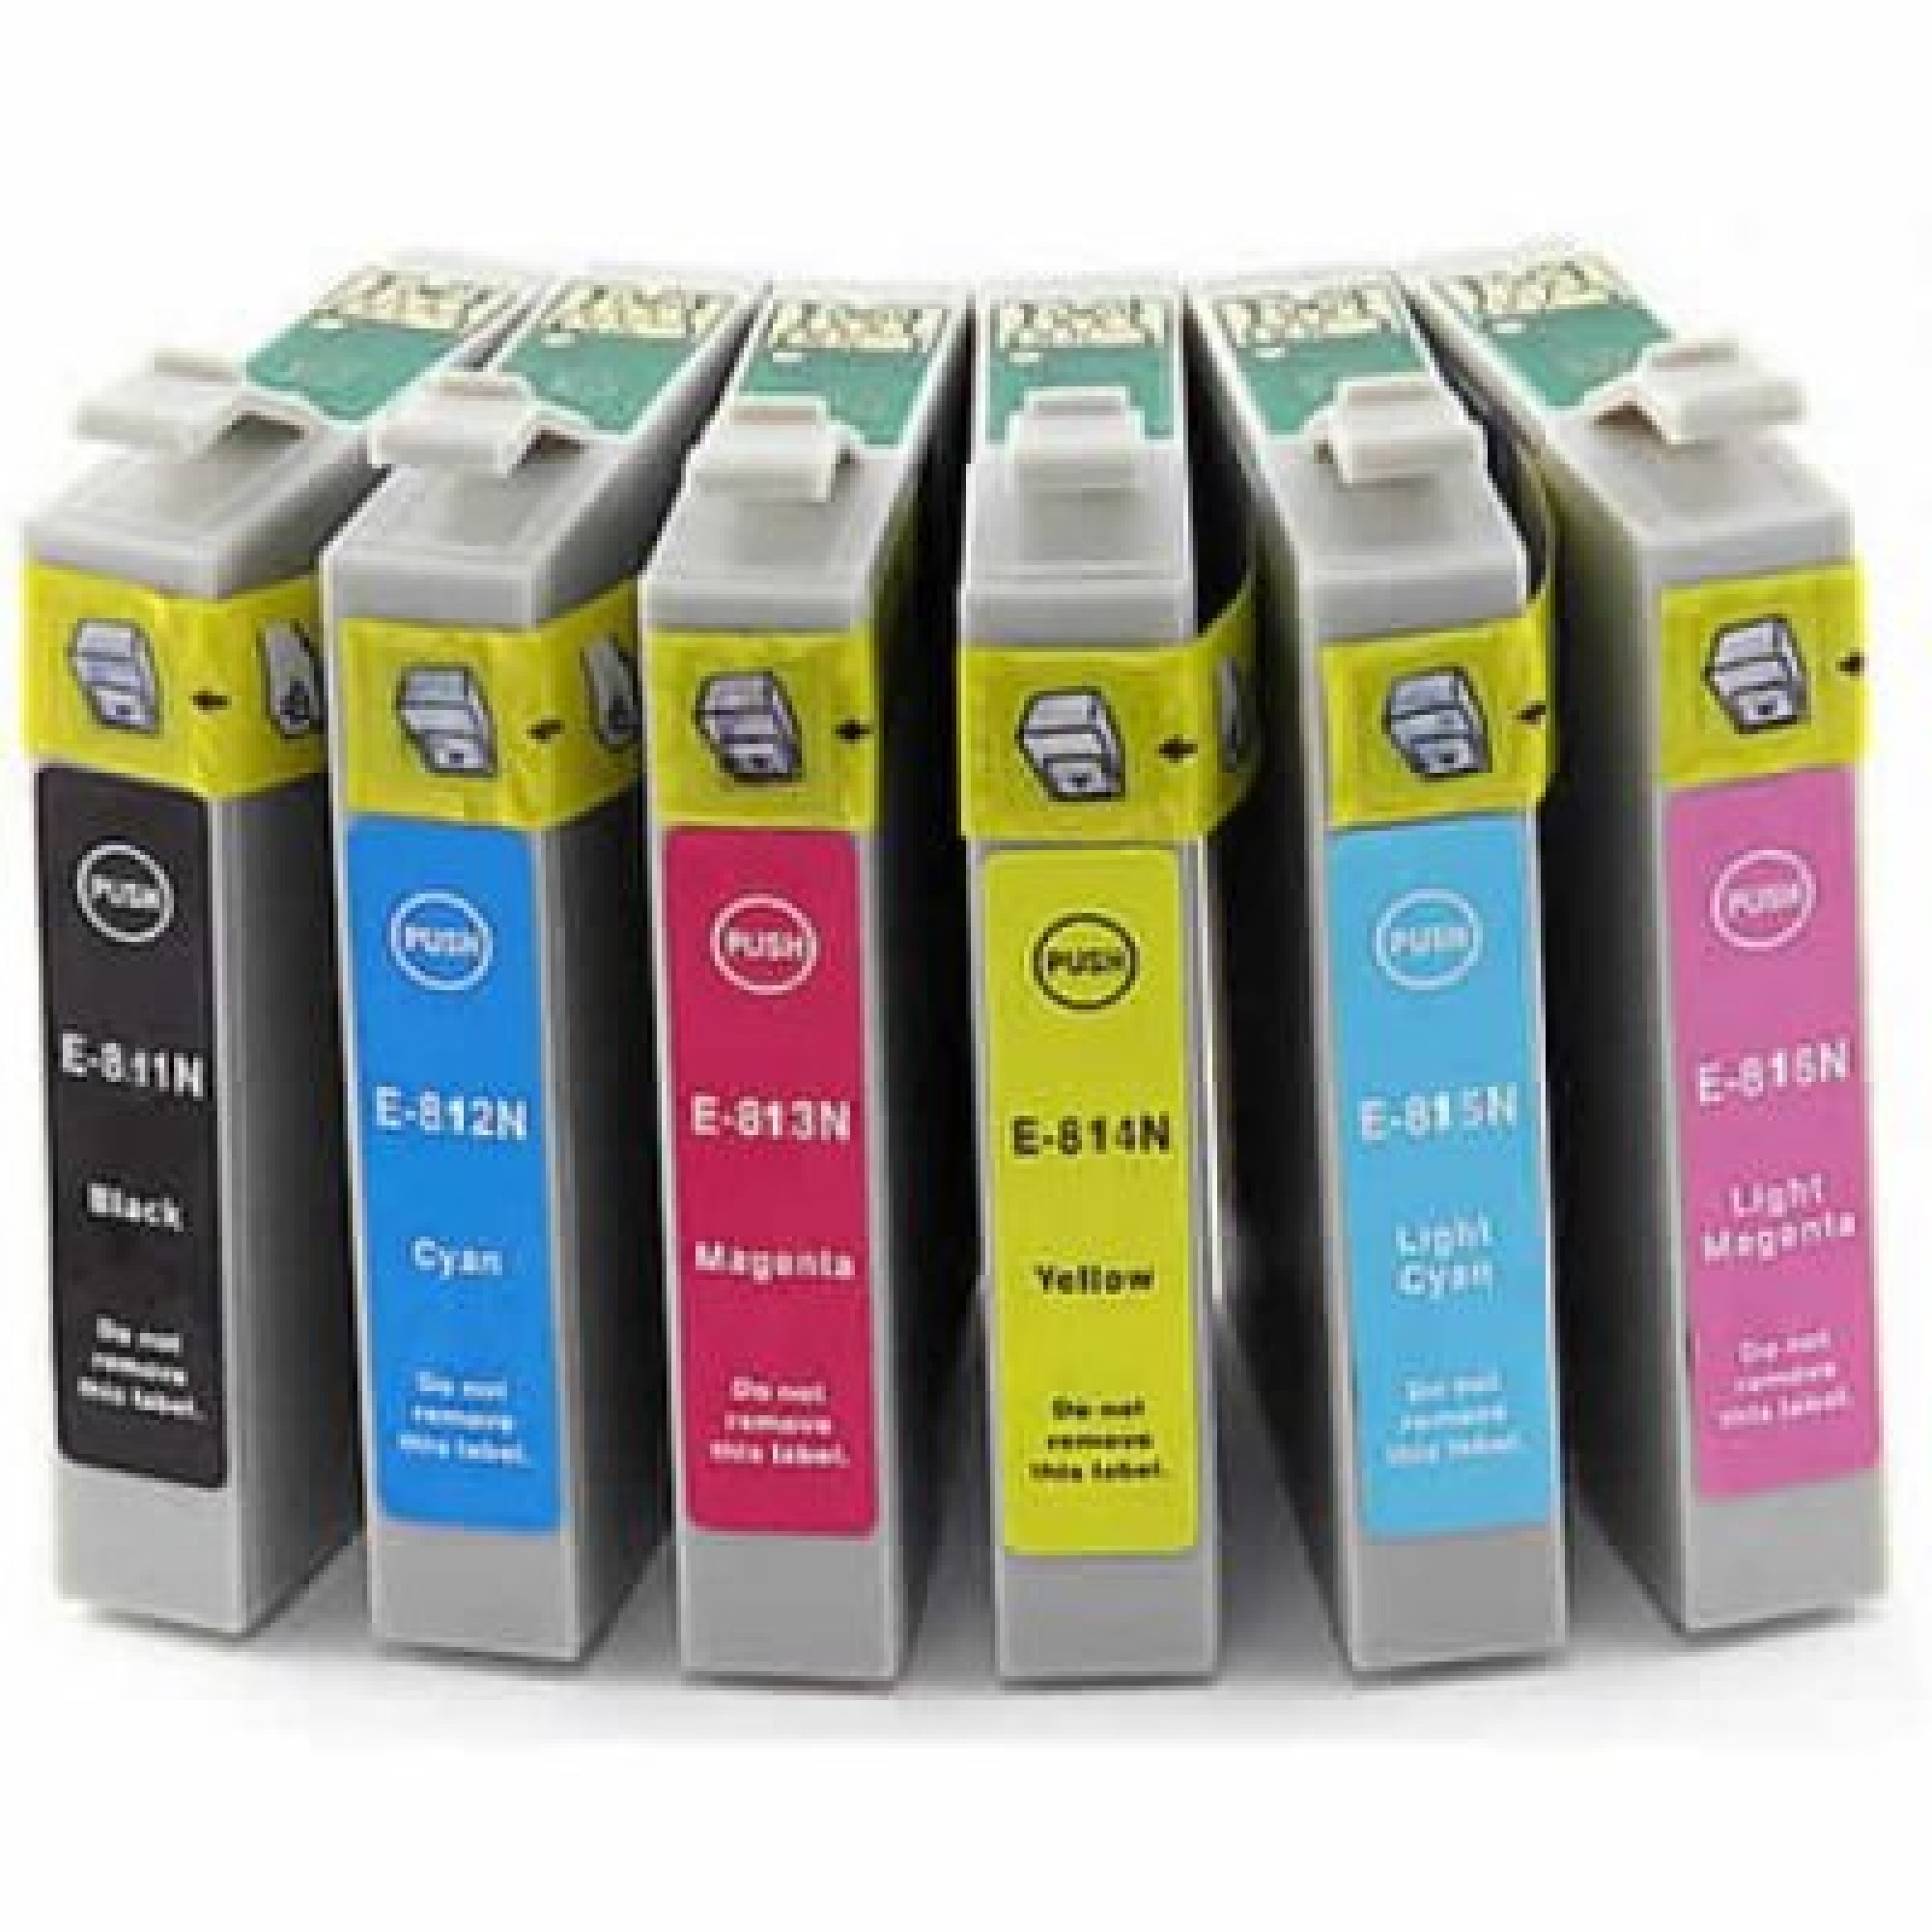 Epson 81N Compatible Ink Cartridge Full Set